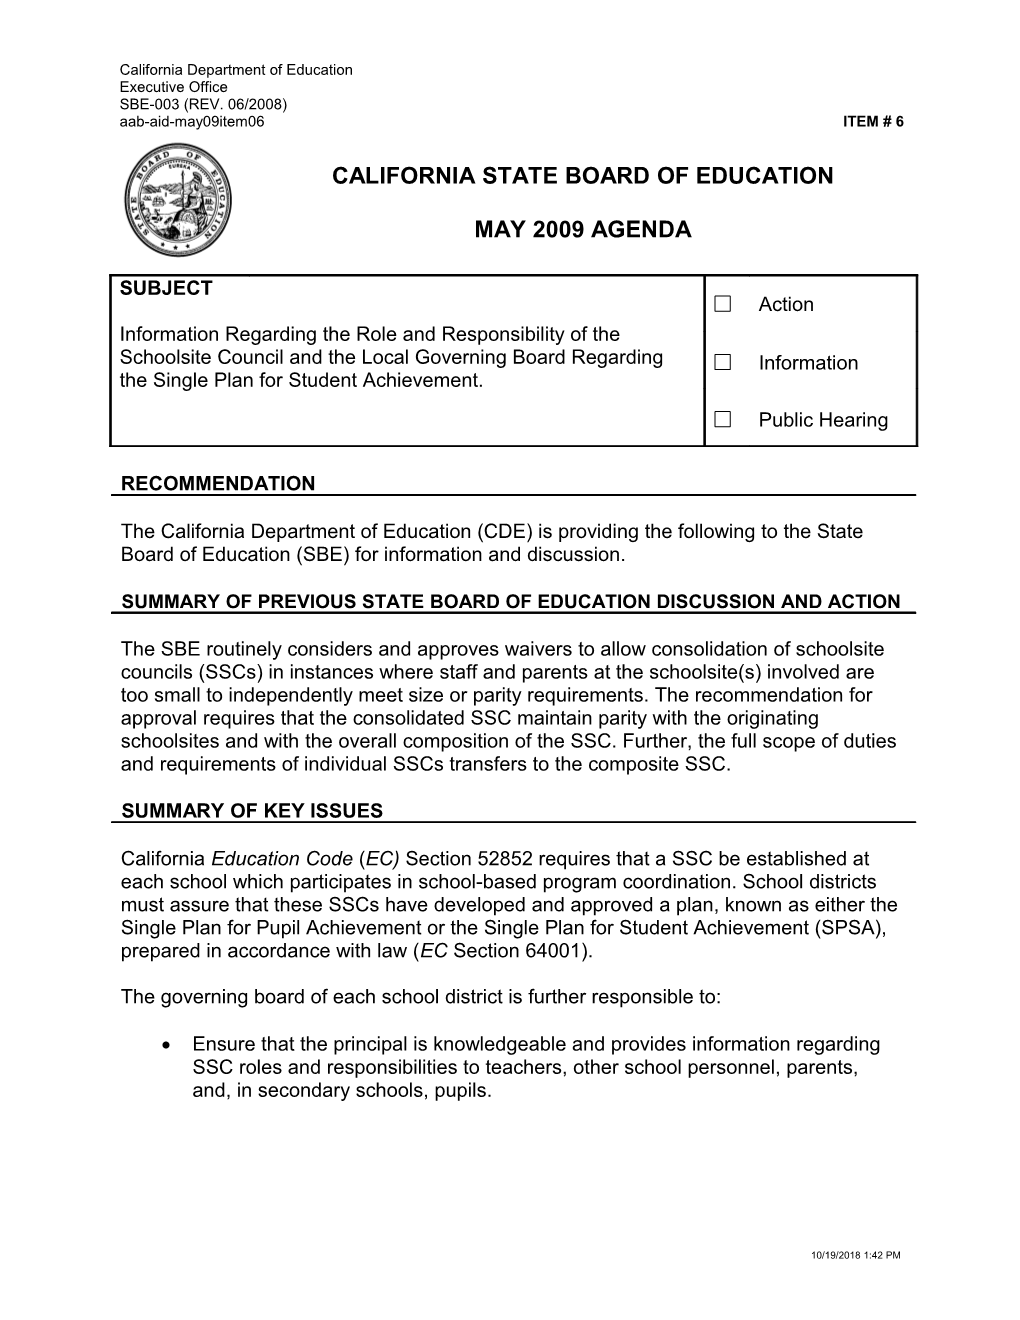 May 2009 Agenda Item 6 - Meeting Agendas (CA State Board of Education)